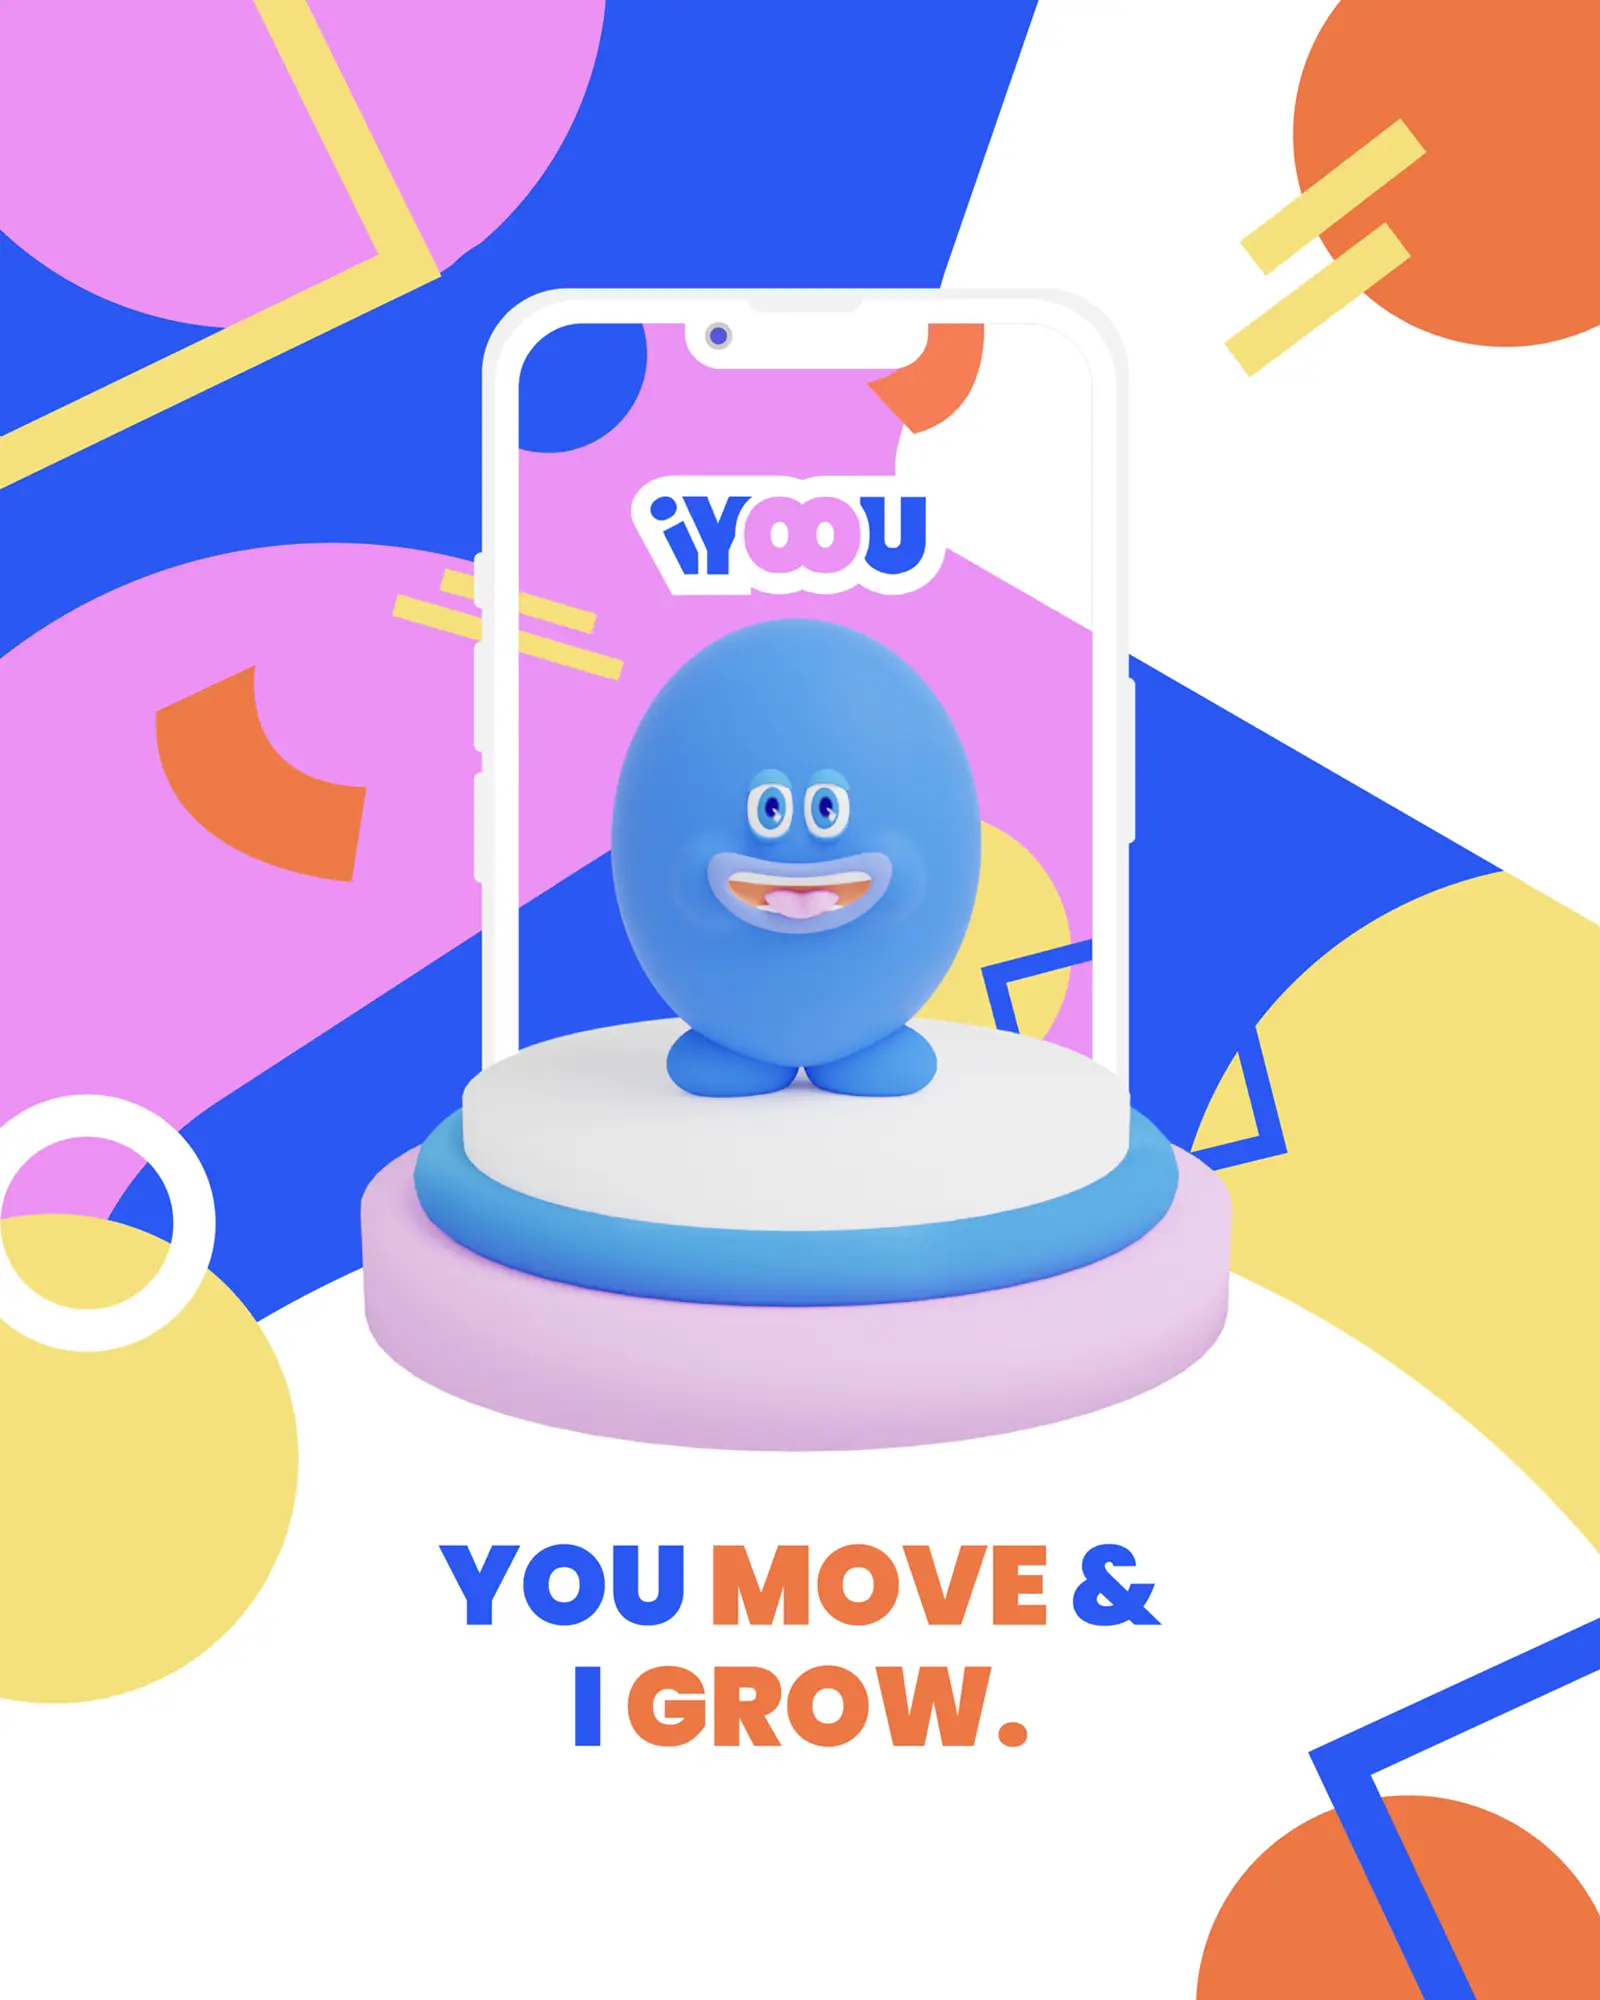 You move & I grow